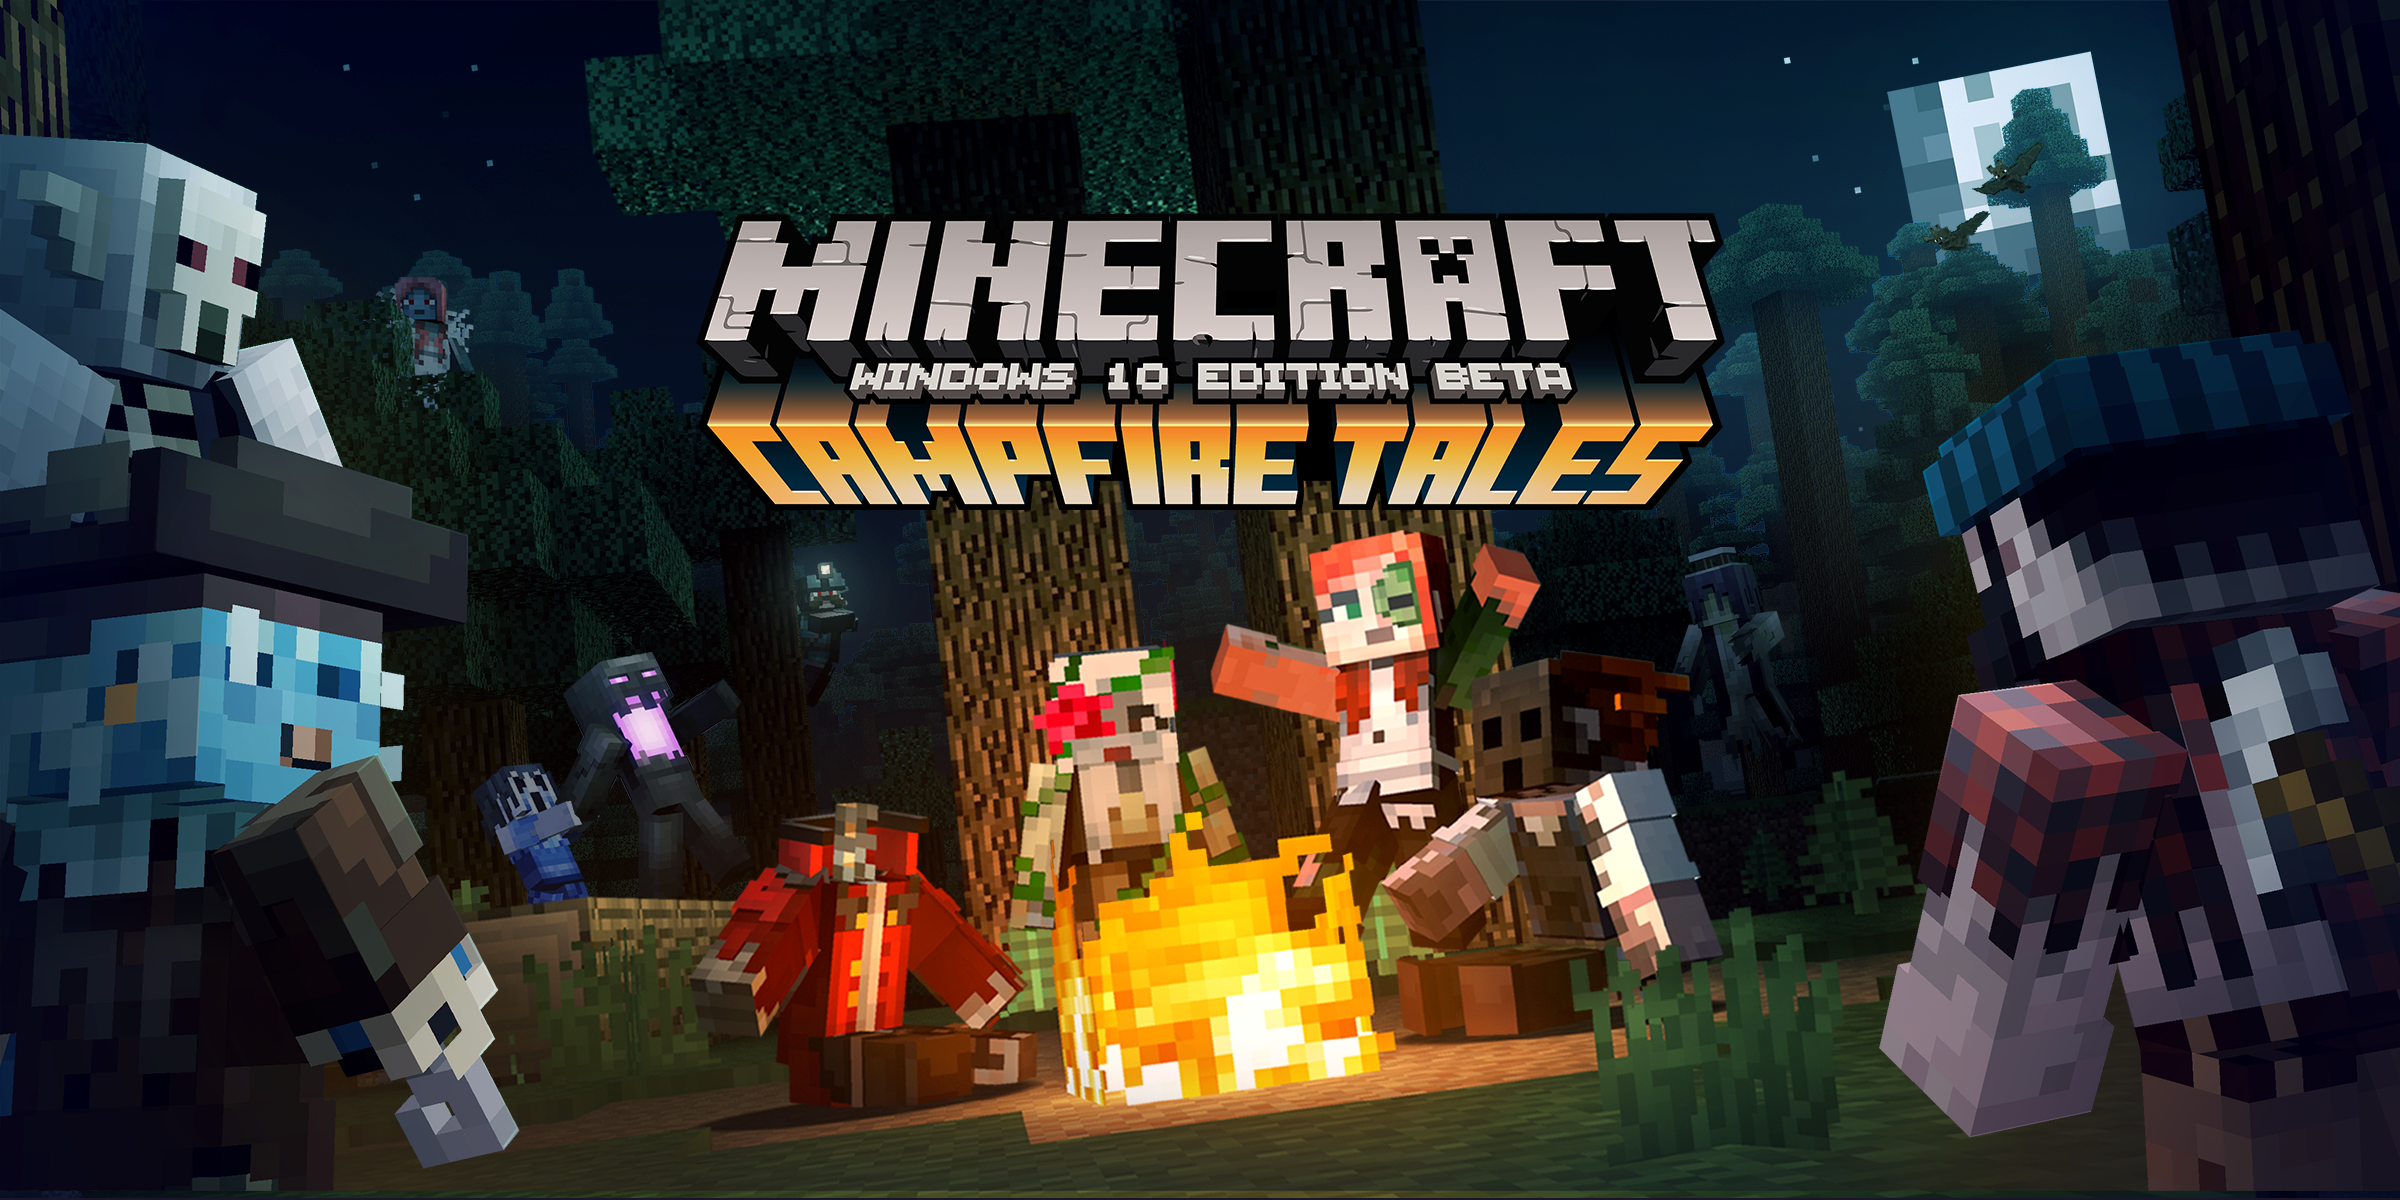 Campfire Tales skin pack in Minecraft:Windows 10 Edition Beta